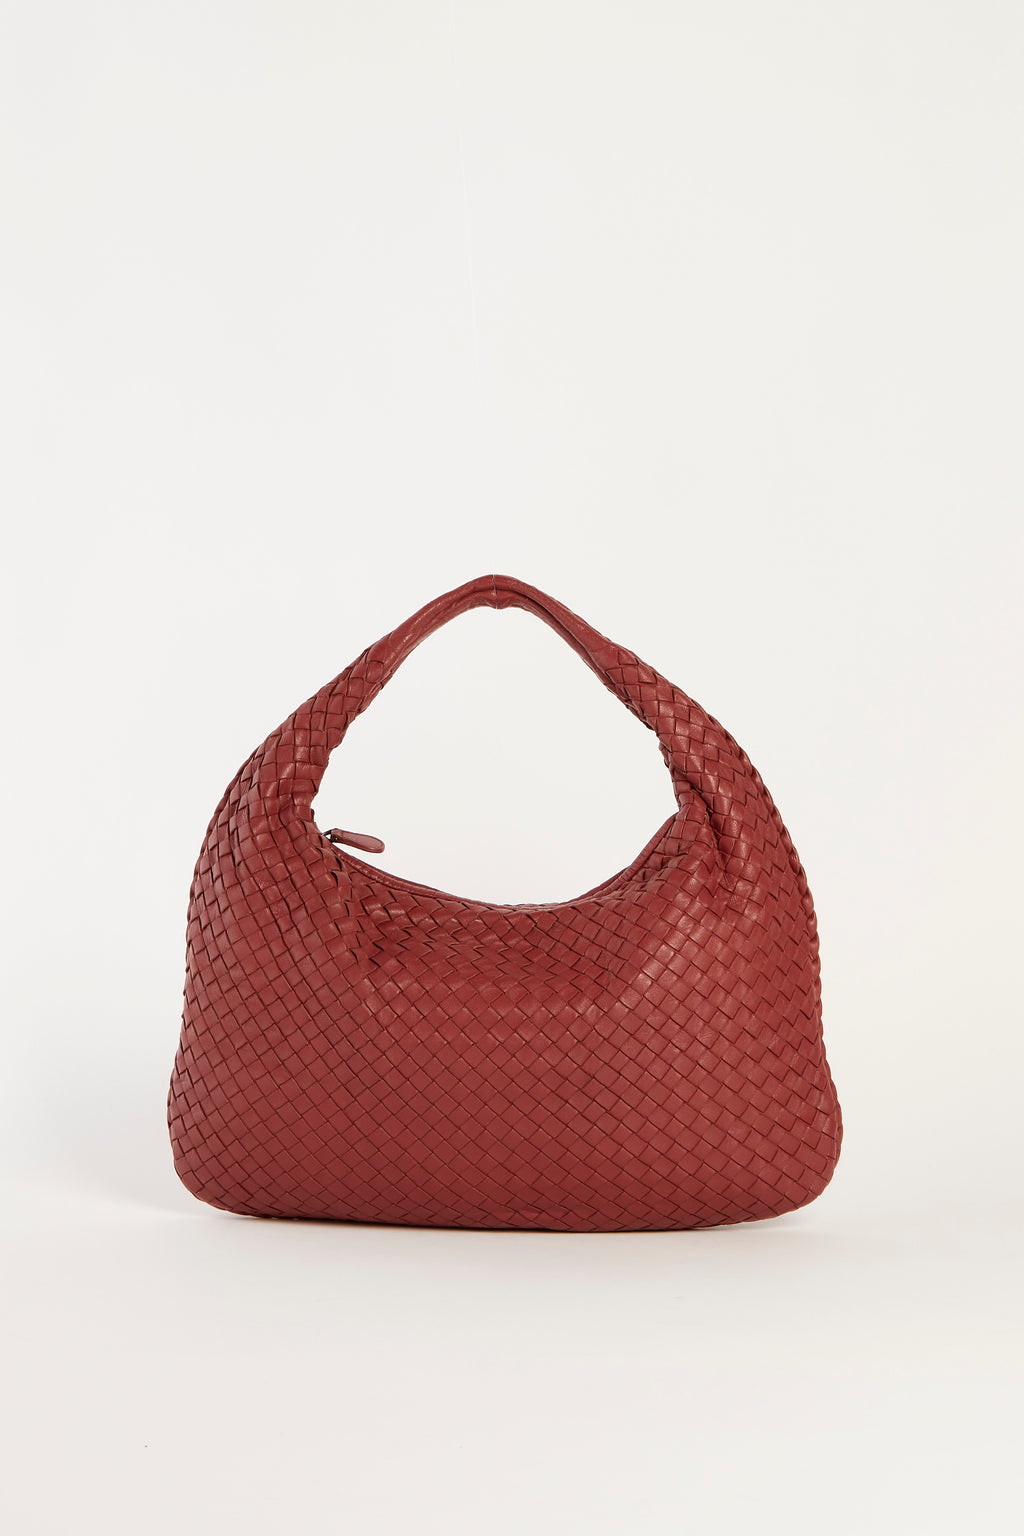 Vintage Bottega Veneta Brick Red Intrecciato Shoulder Bag